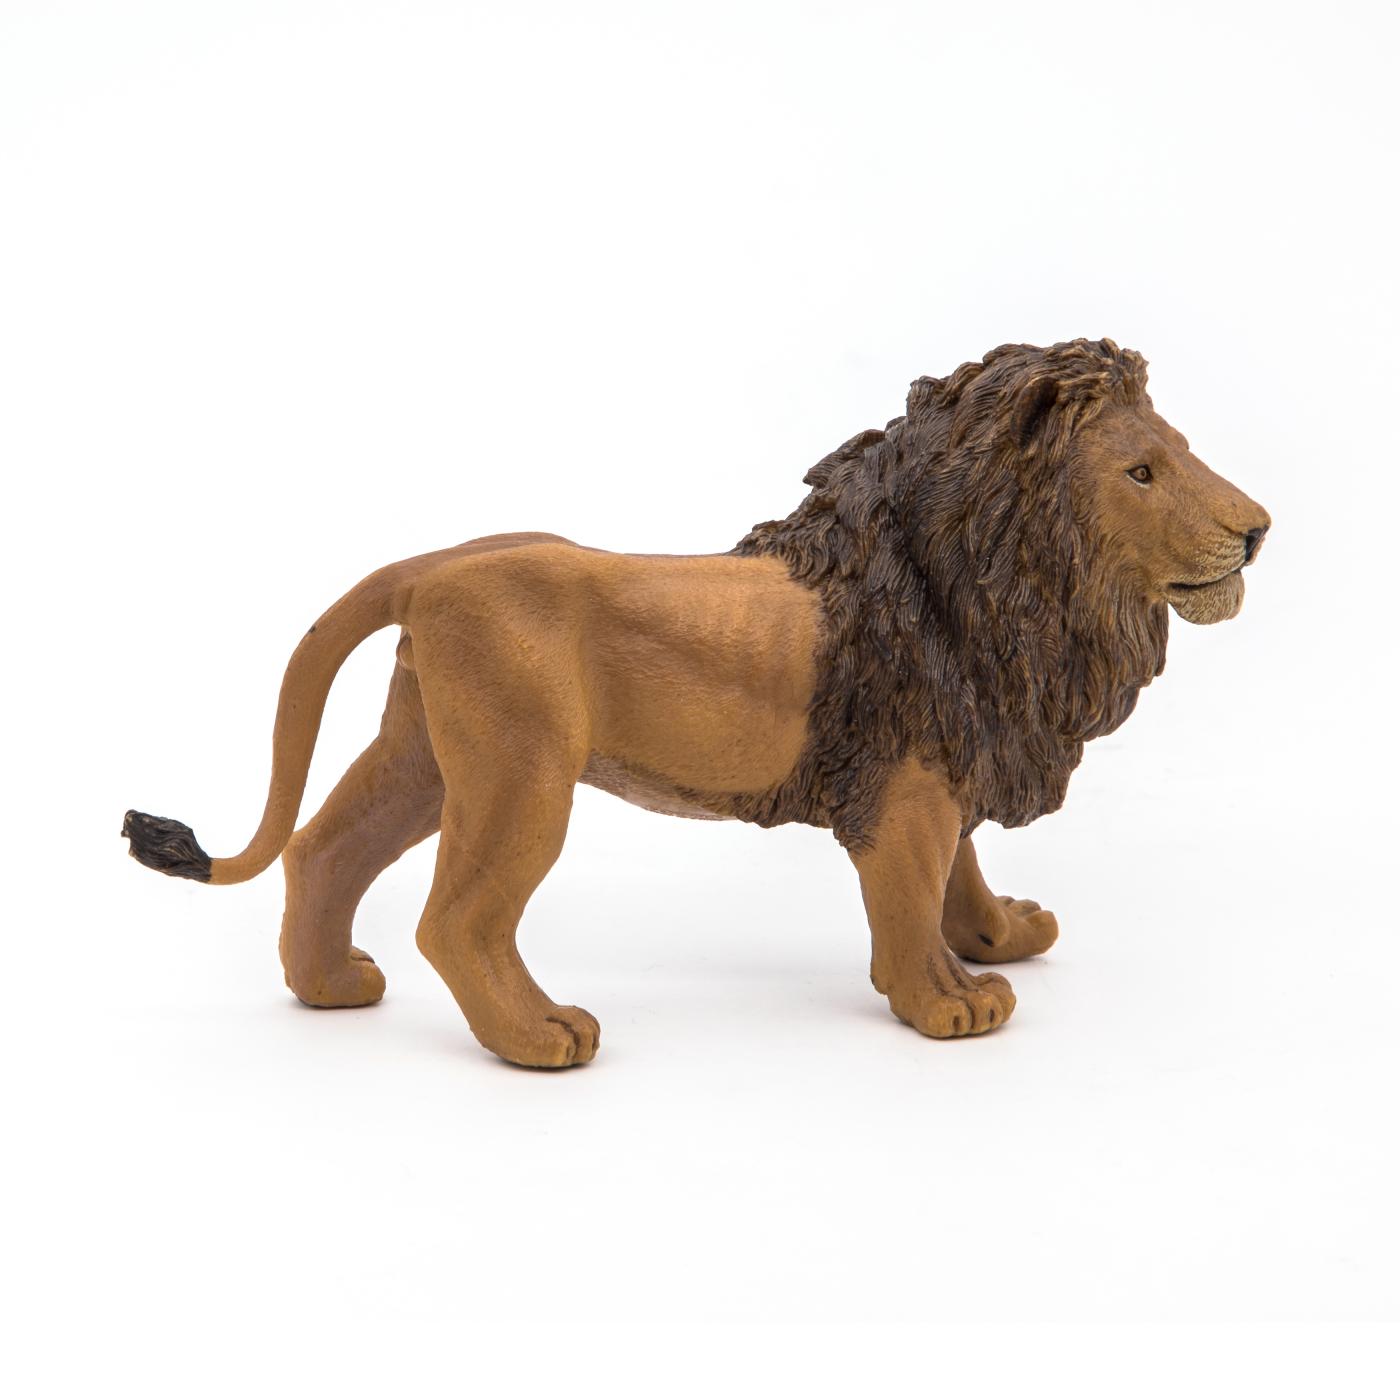 PAPO Wild Animal Kingdom Lion 50040 NEW 